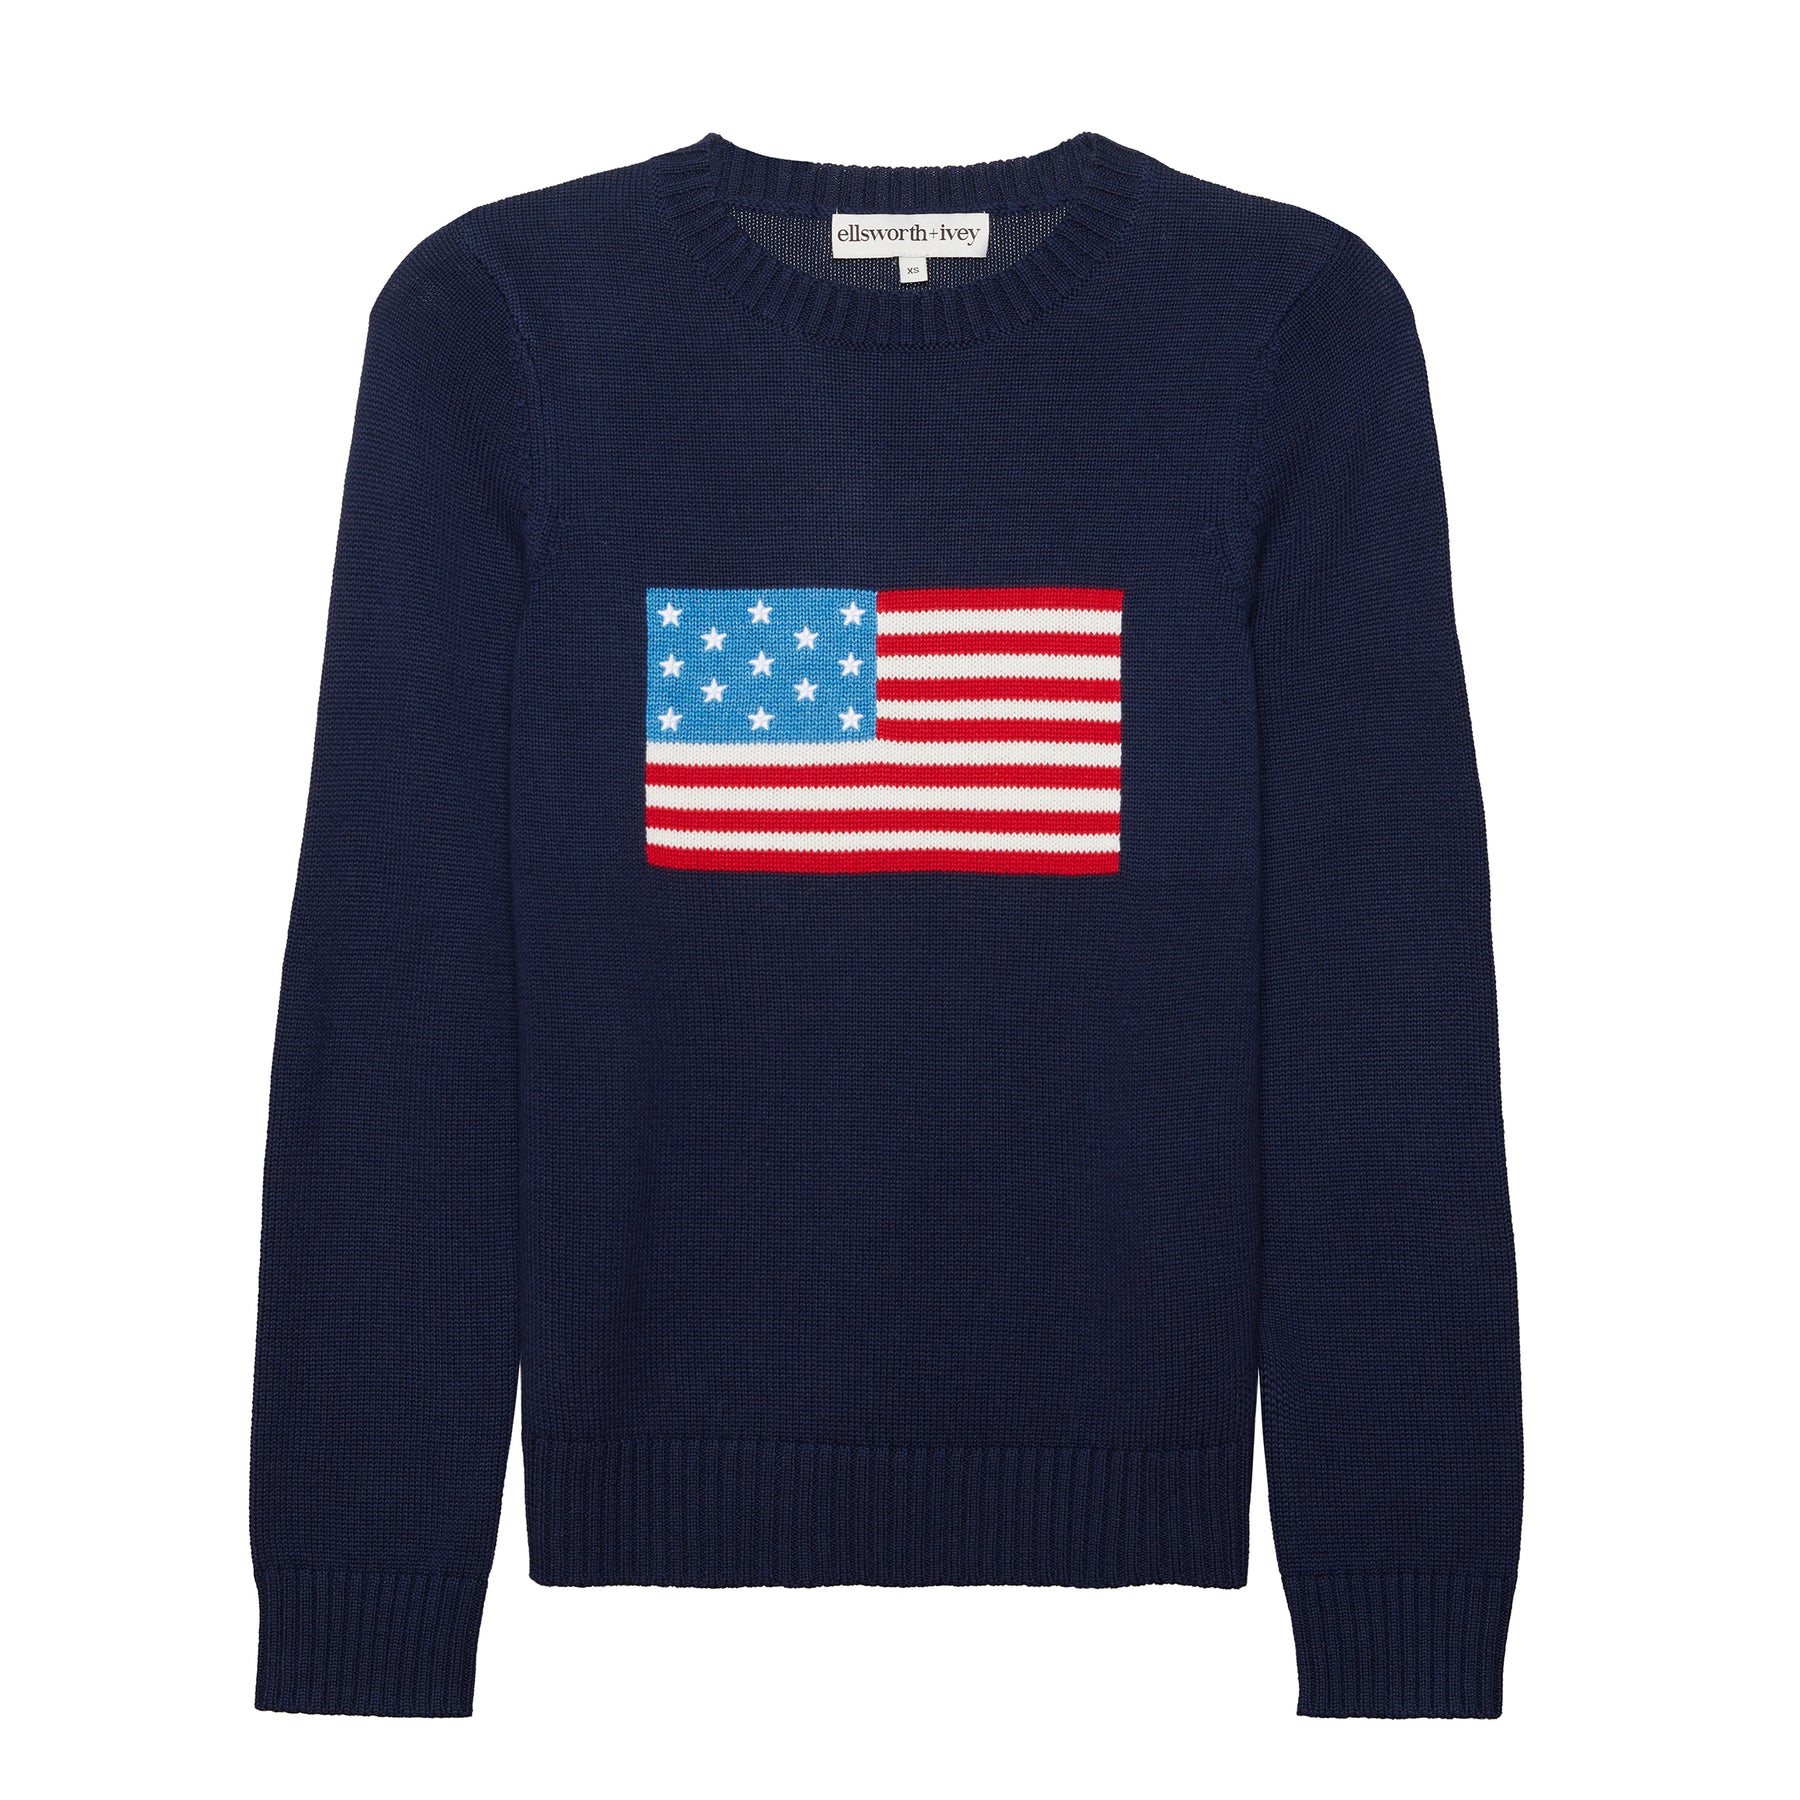 Ellsworth + Ivey Women's American Flag Sweater